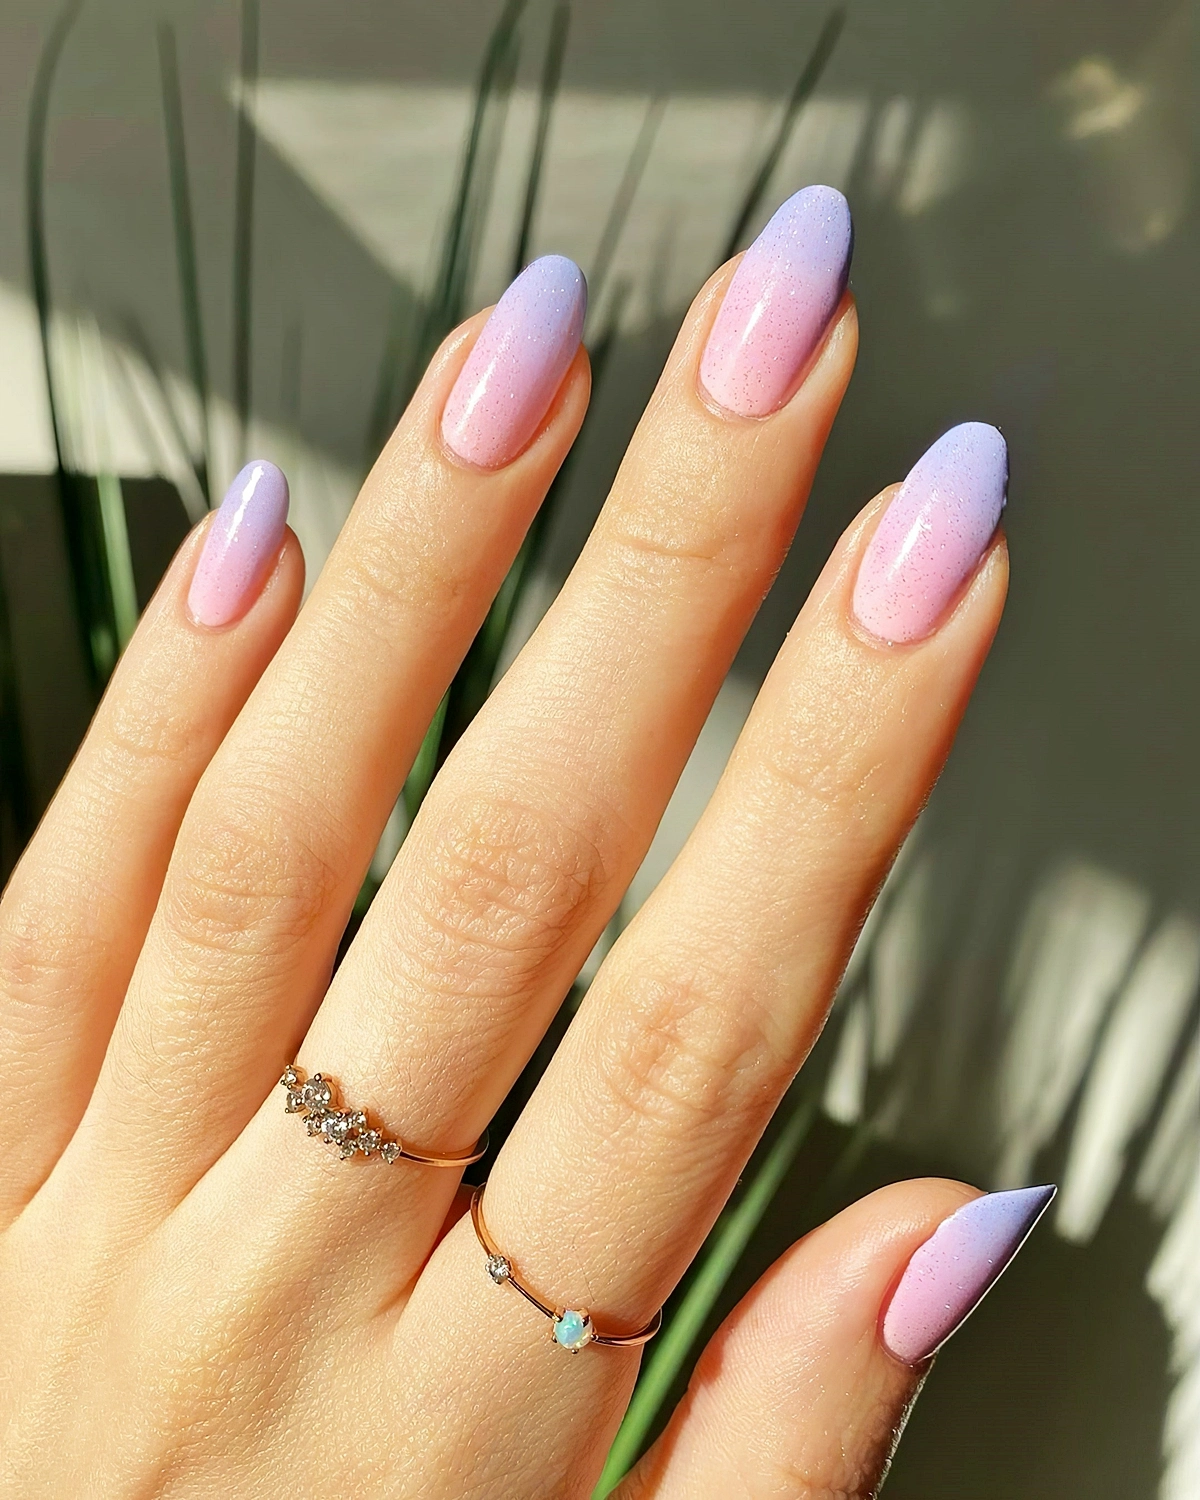 babyboomer nails mit farbe lavendel naegel ideen moderne nagelform 